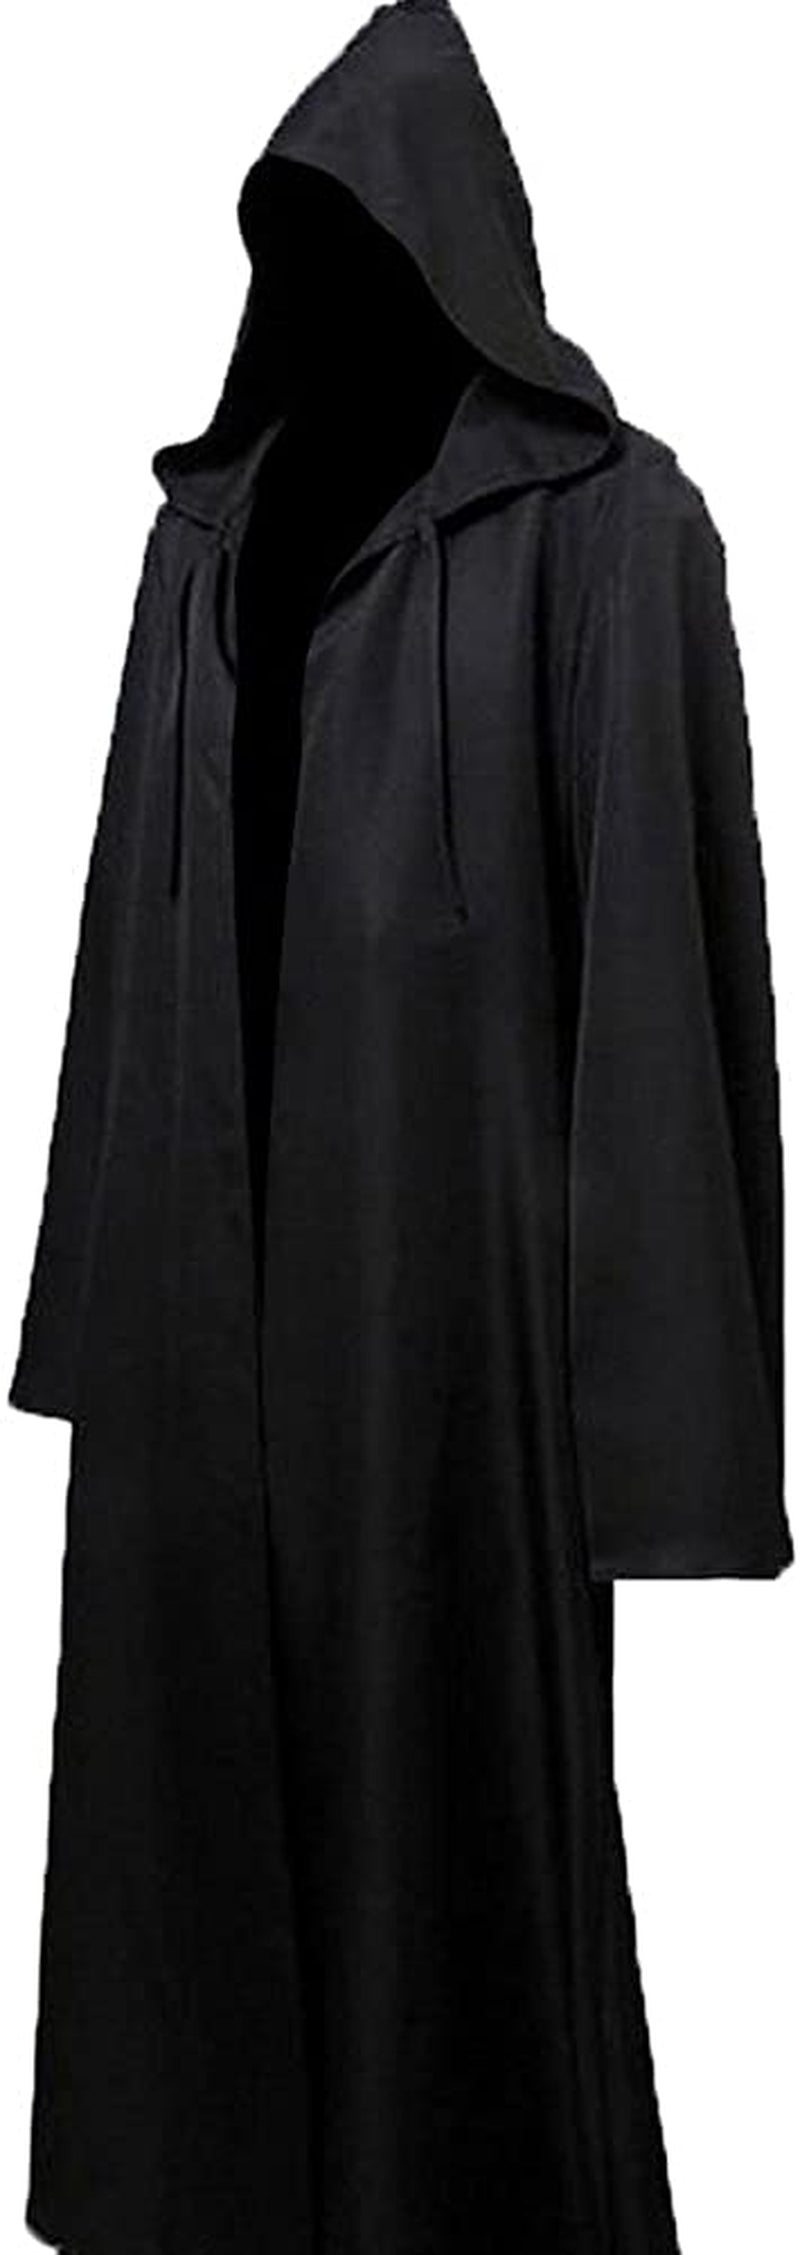 JOYSHOP Men & Kids Tunic Hooded Robe Halloween Cosplay Costume Robe Cloak Cape  JOYSHOP   